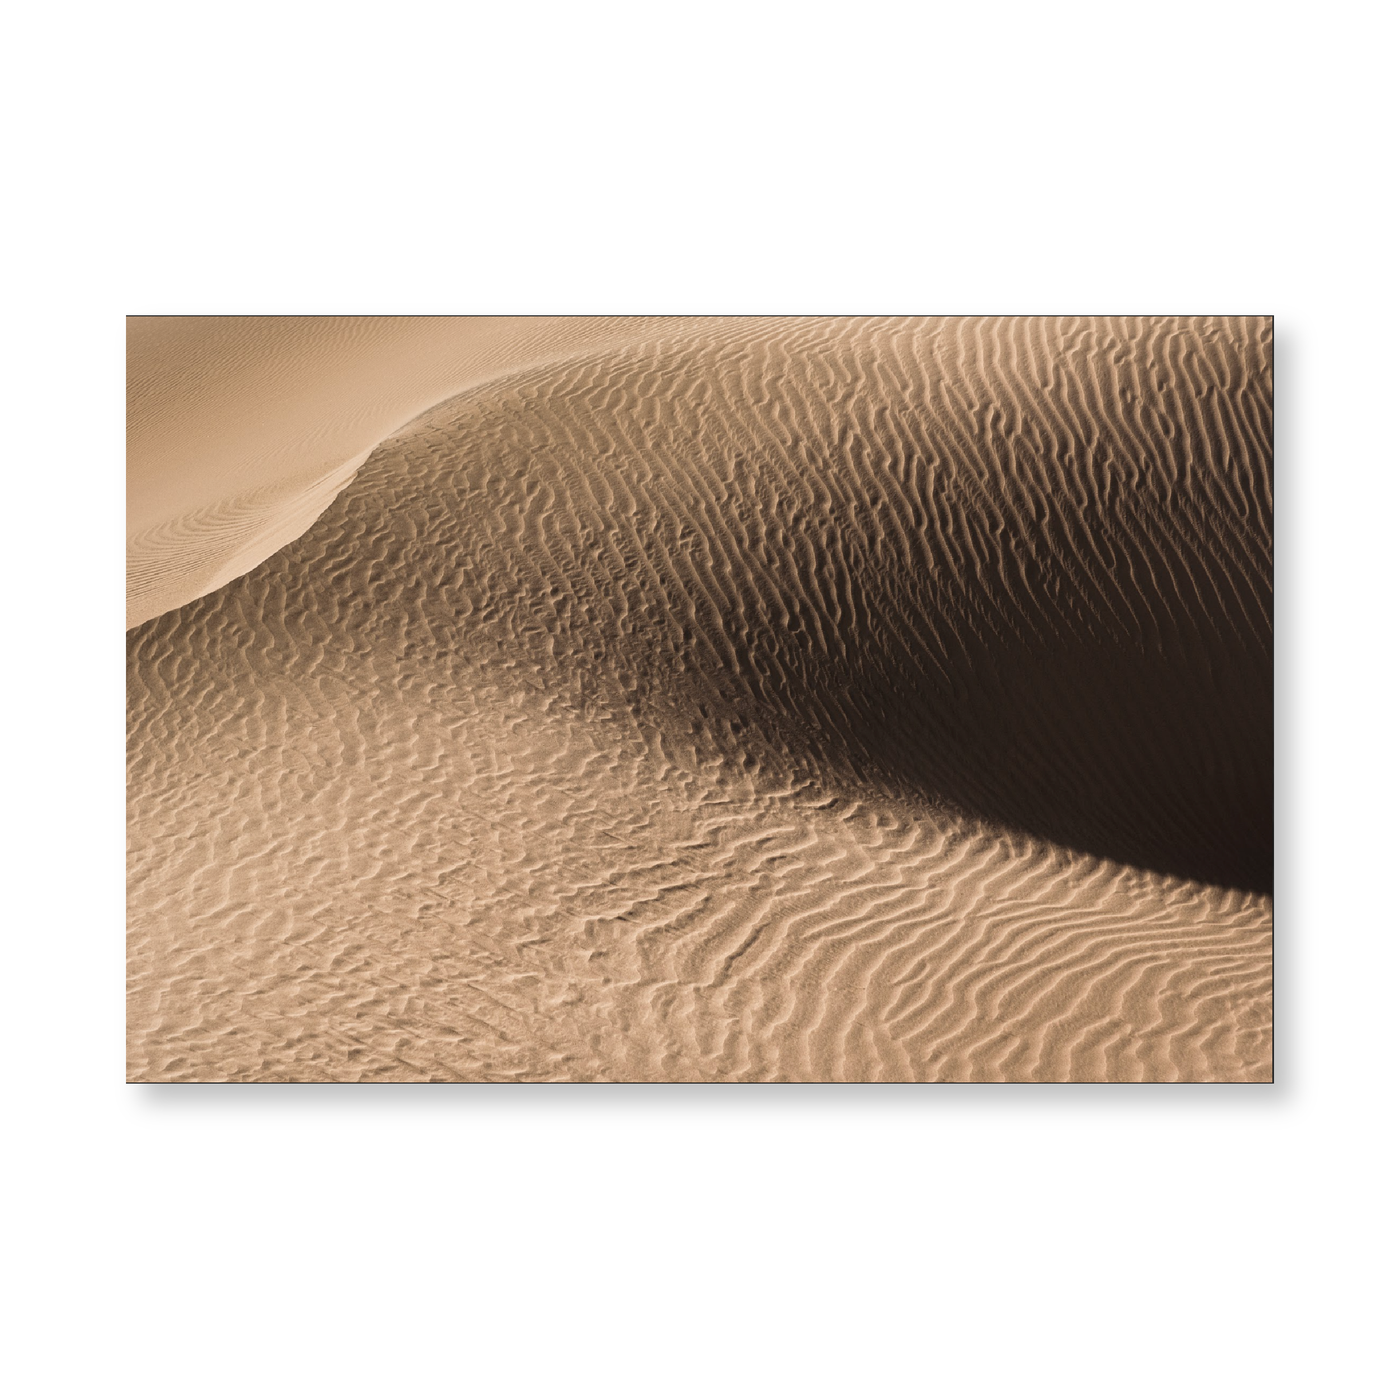 Abstract Sand Dune in the Desert